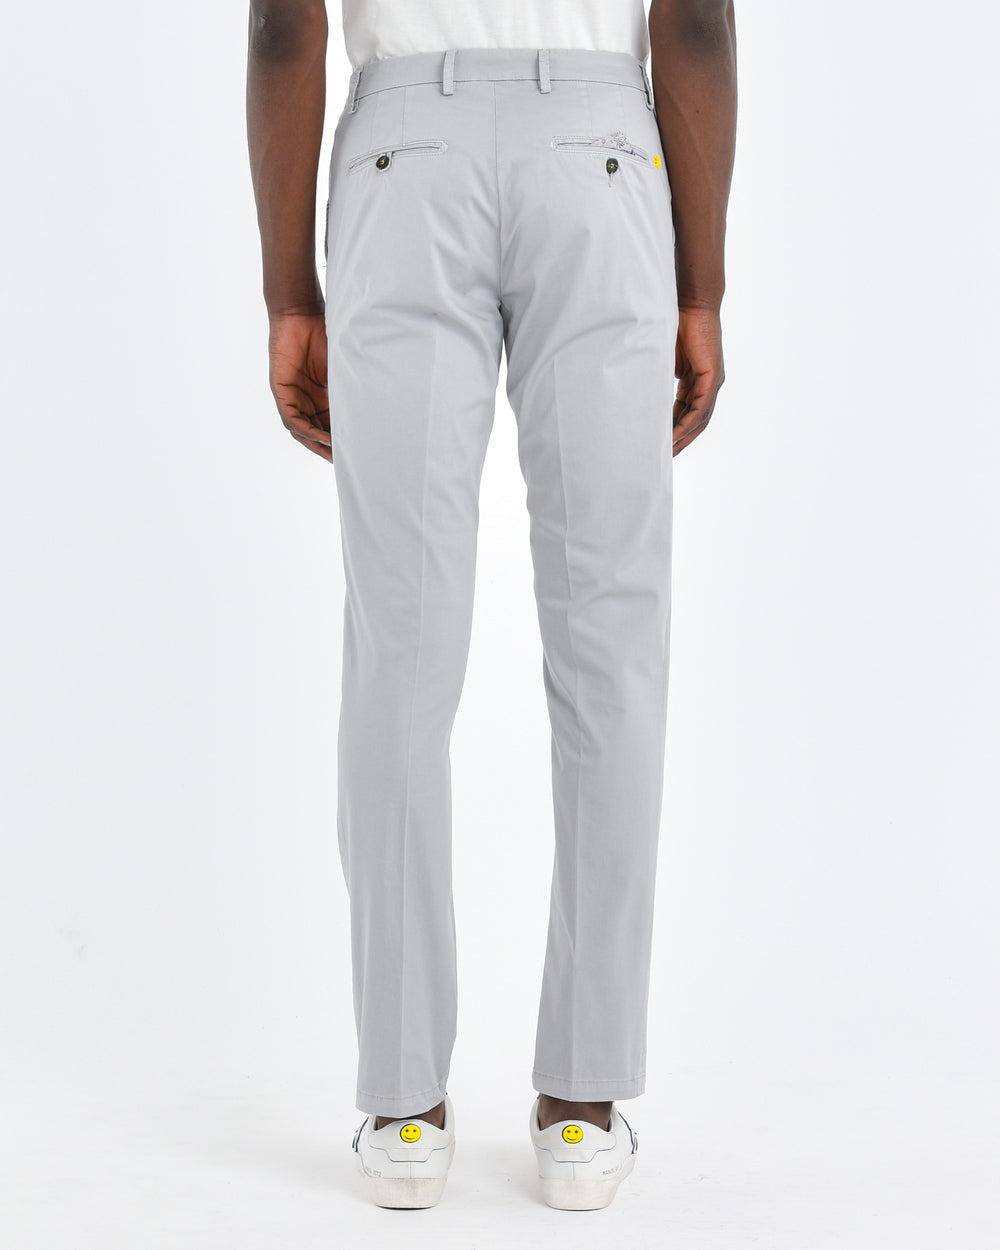 gray stretch cotton garmnet dyed pants slim fit